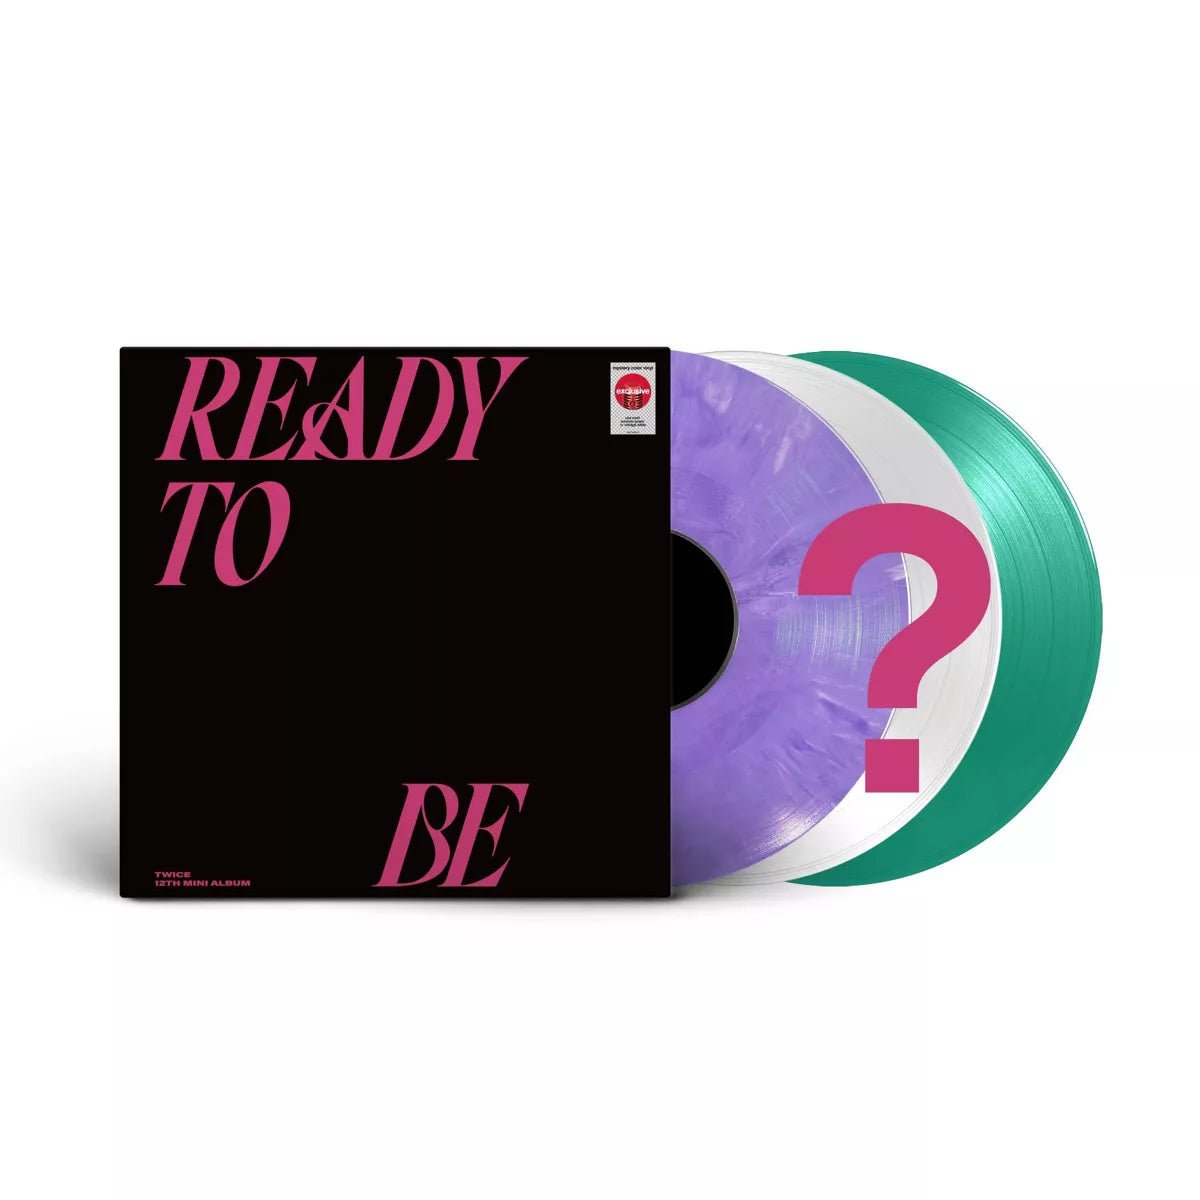 Twice - Ready To Be Vinyl